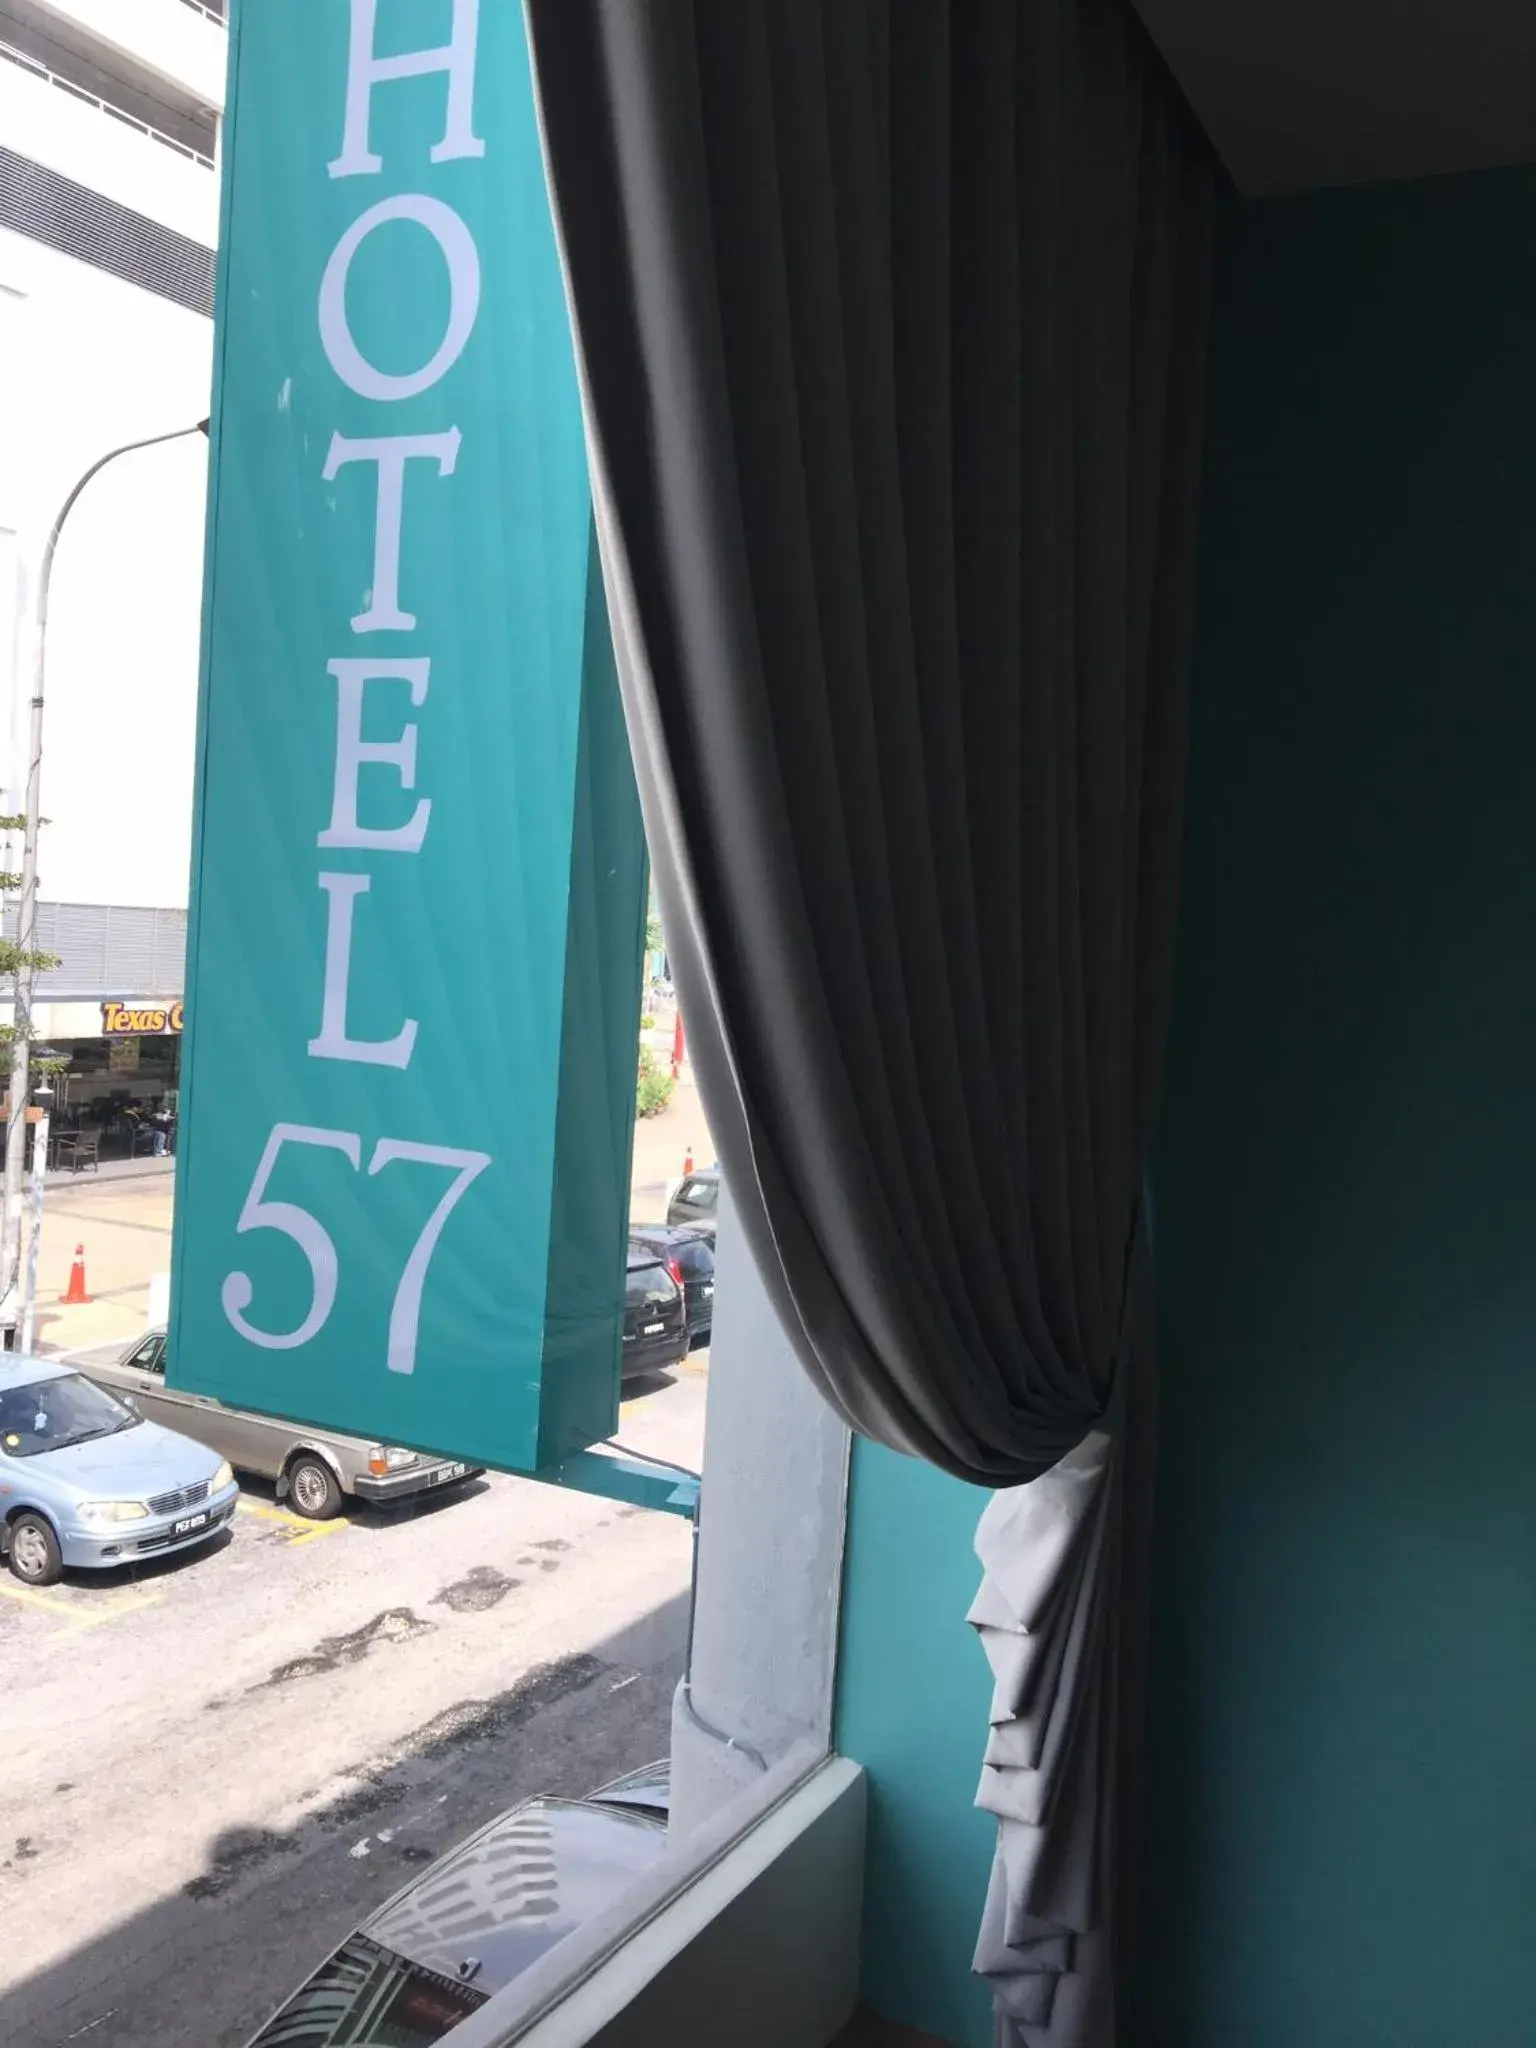 Hotel 57